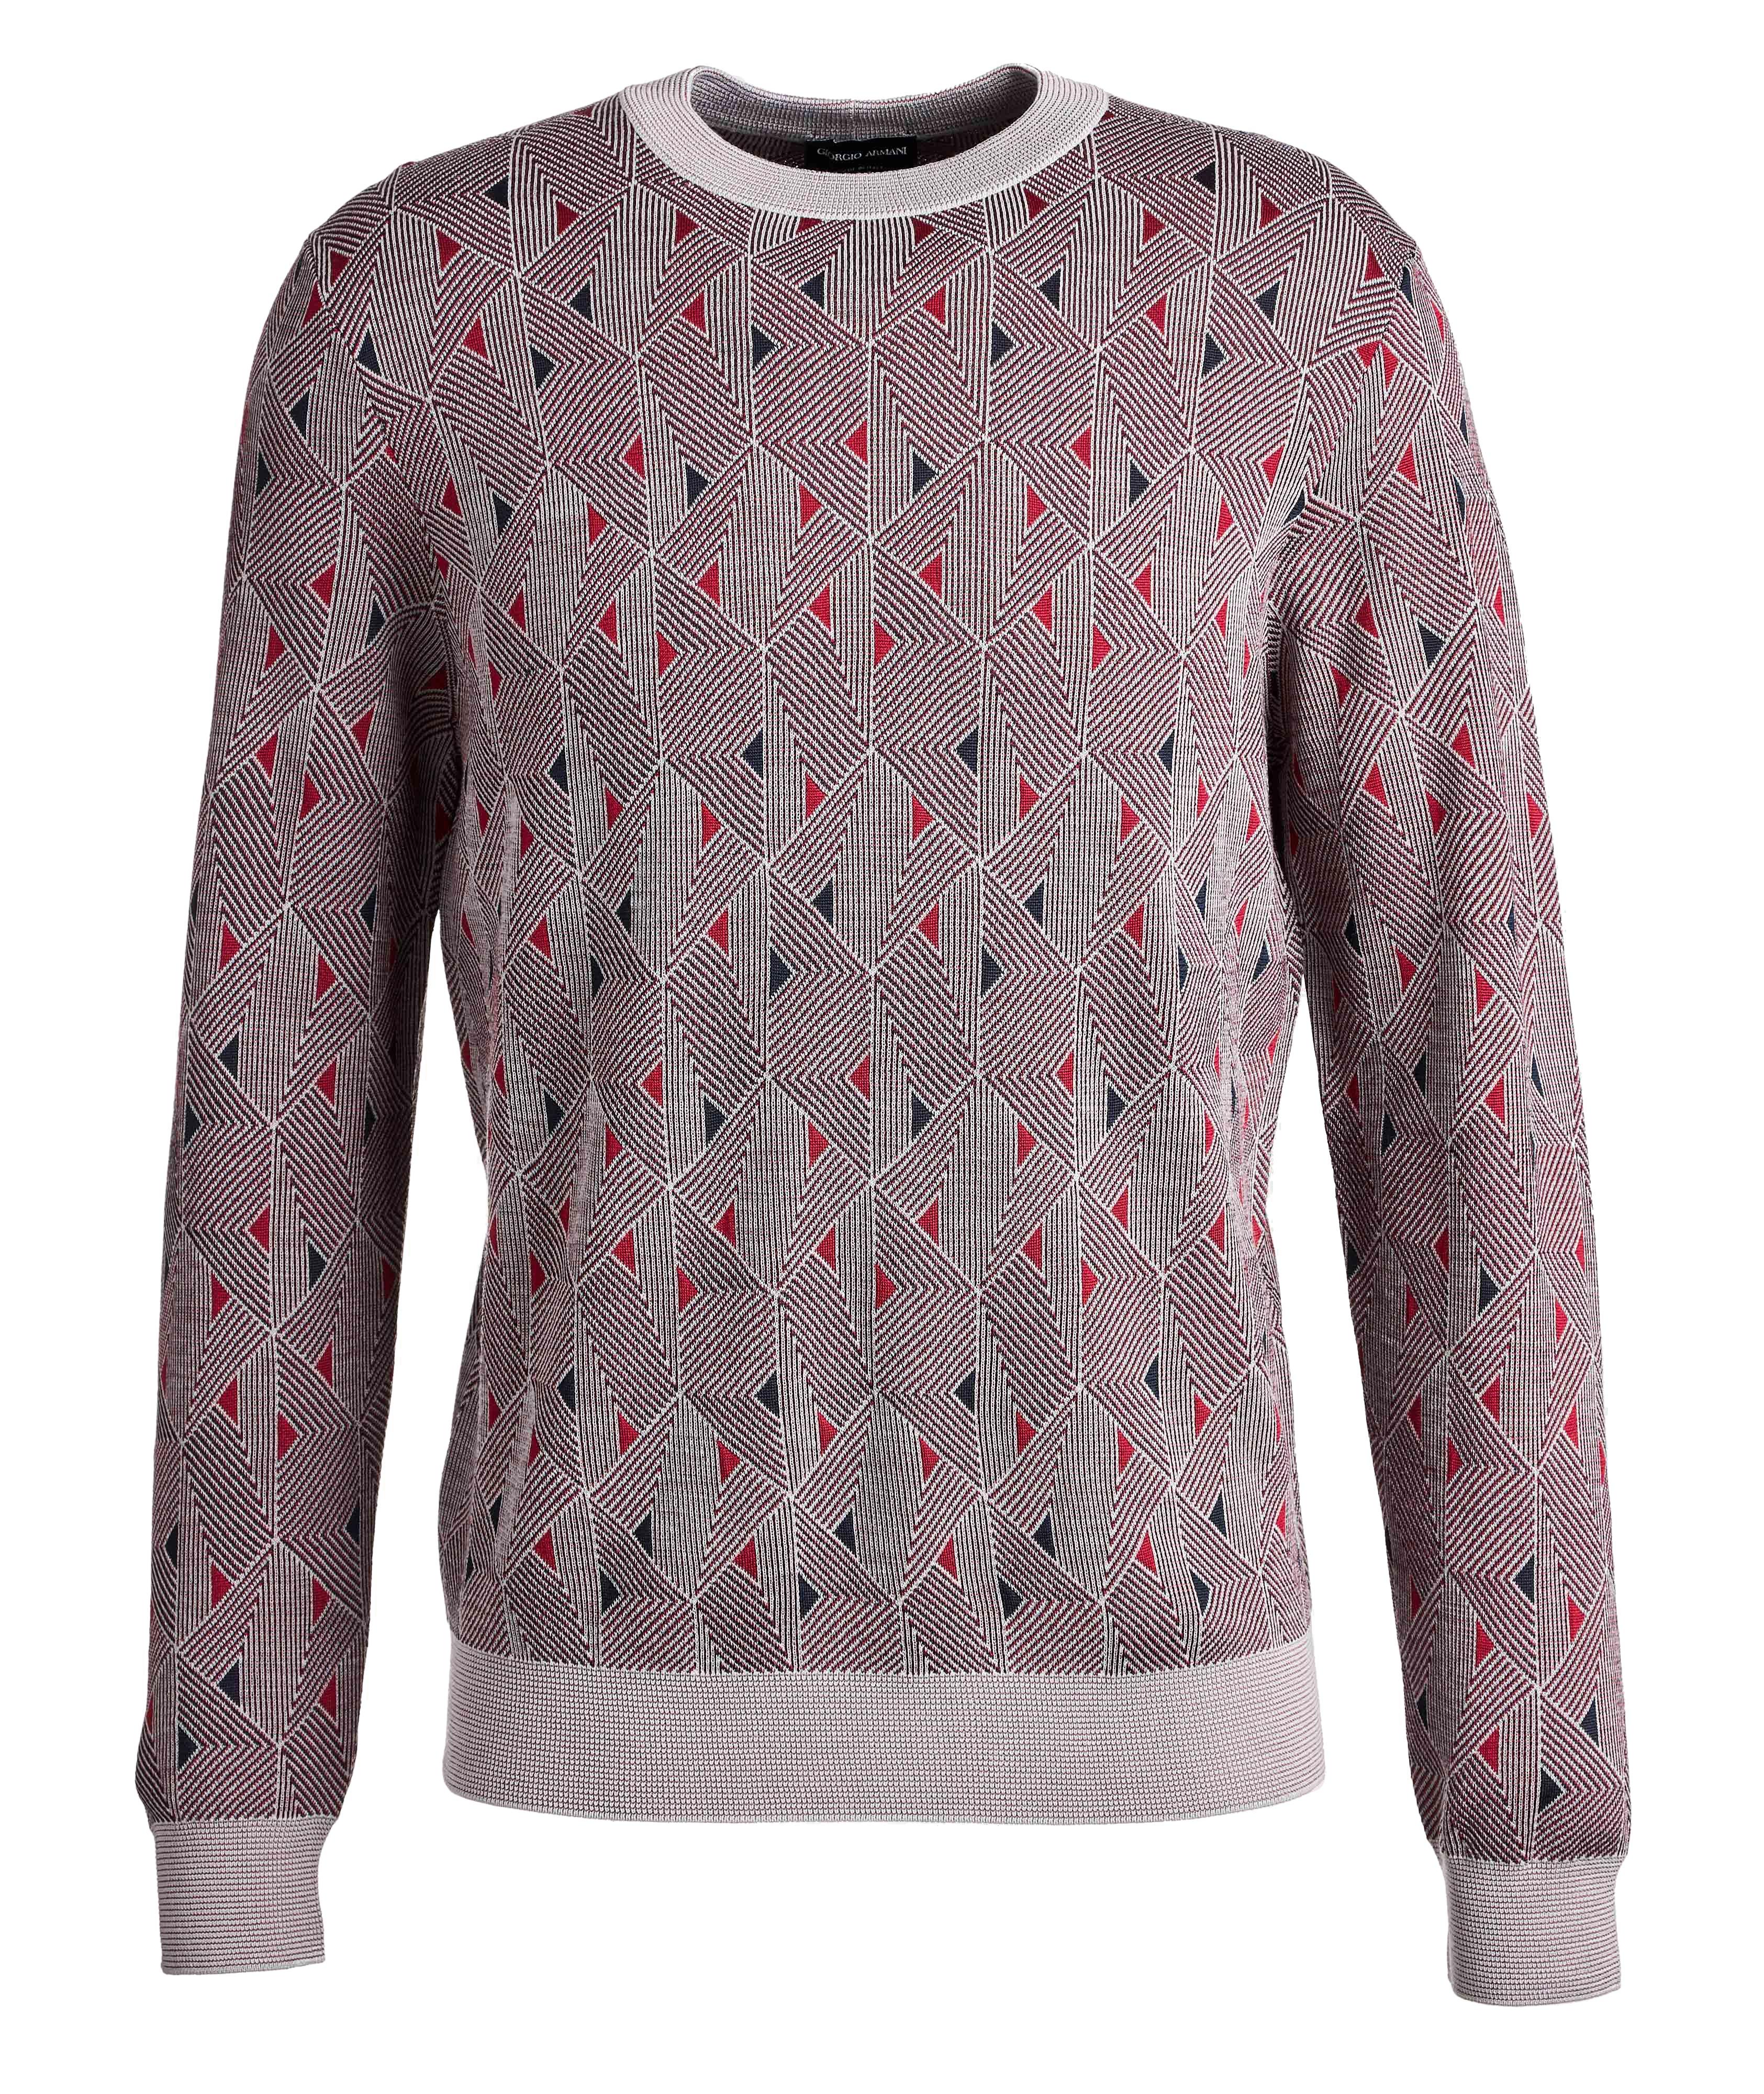 Geometric Wool-Blend Sweater image 0